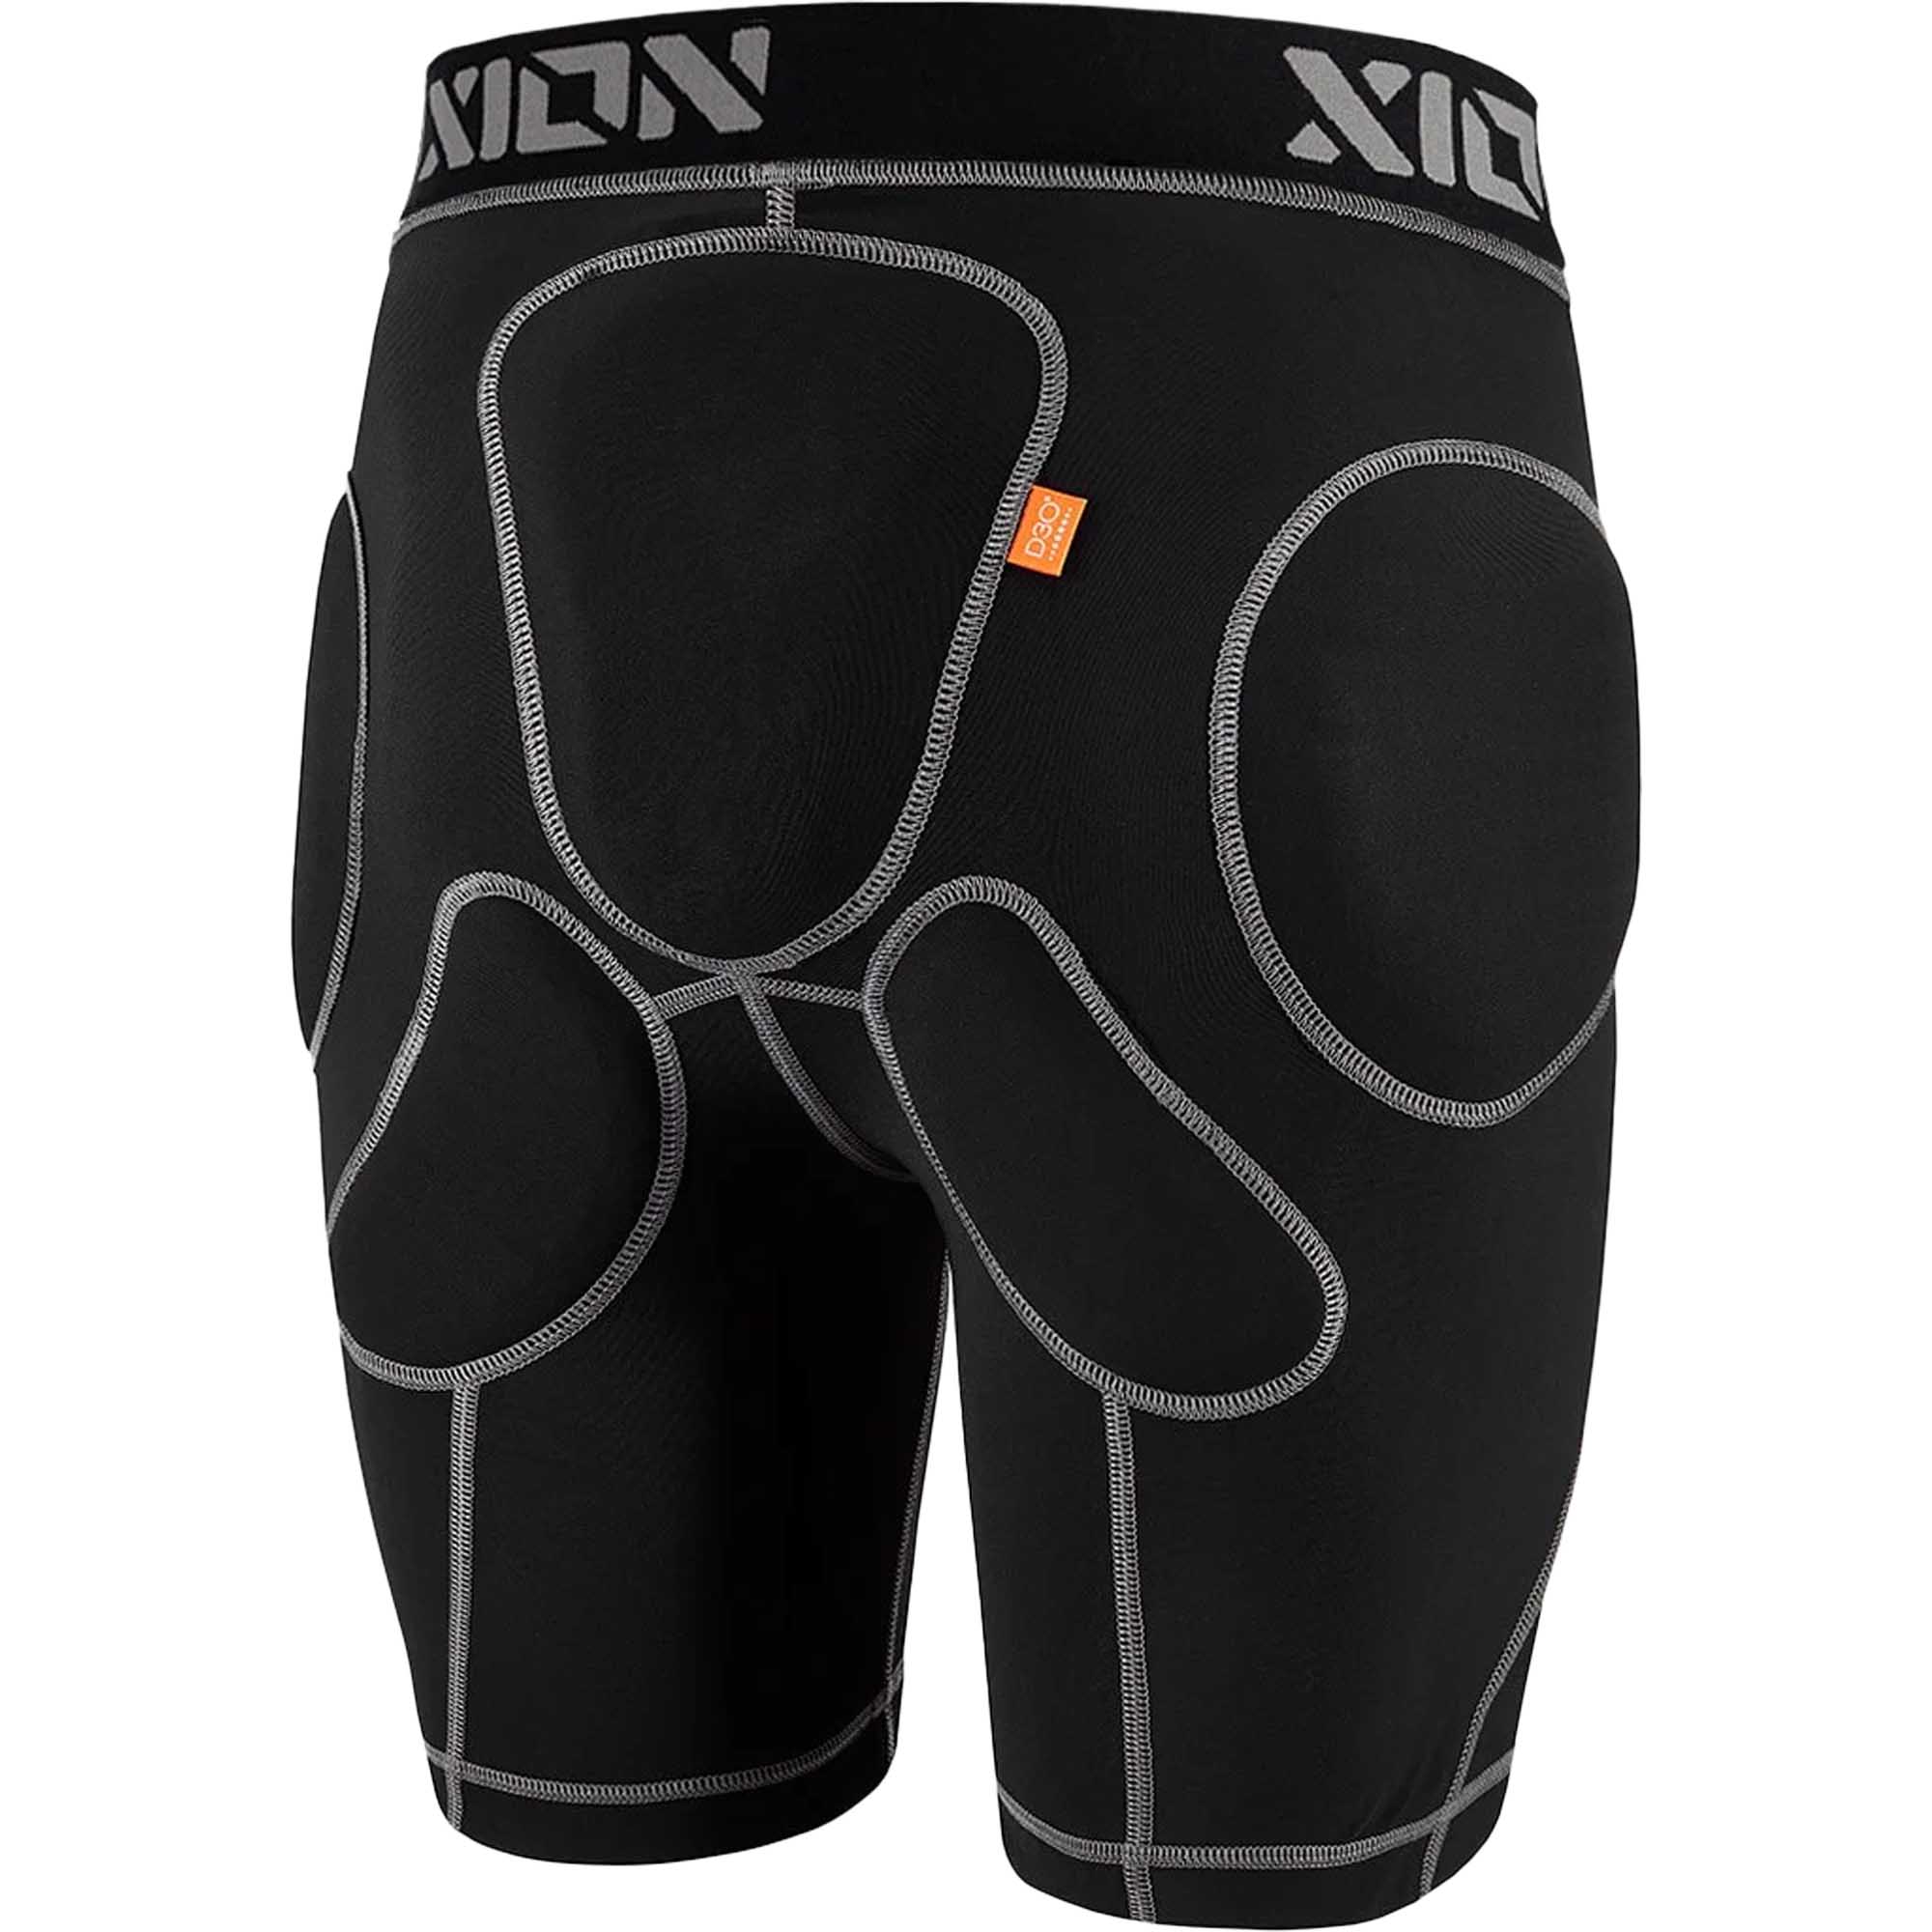 Xion Freeride-Evo D3O Ski/Snowboard Impact Shorts